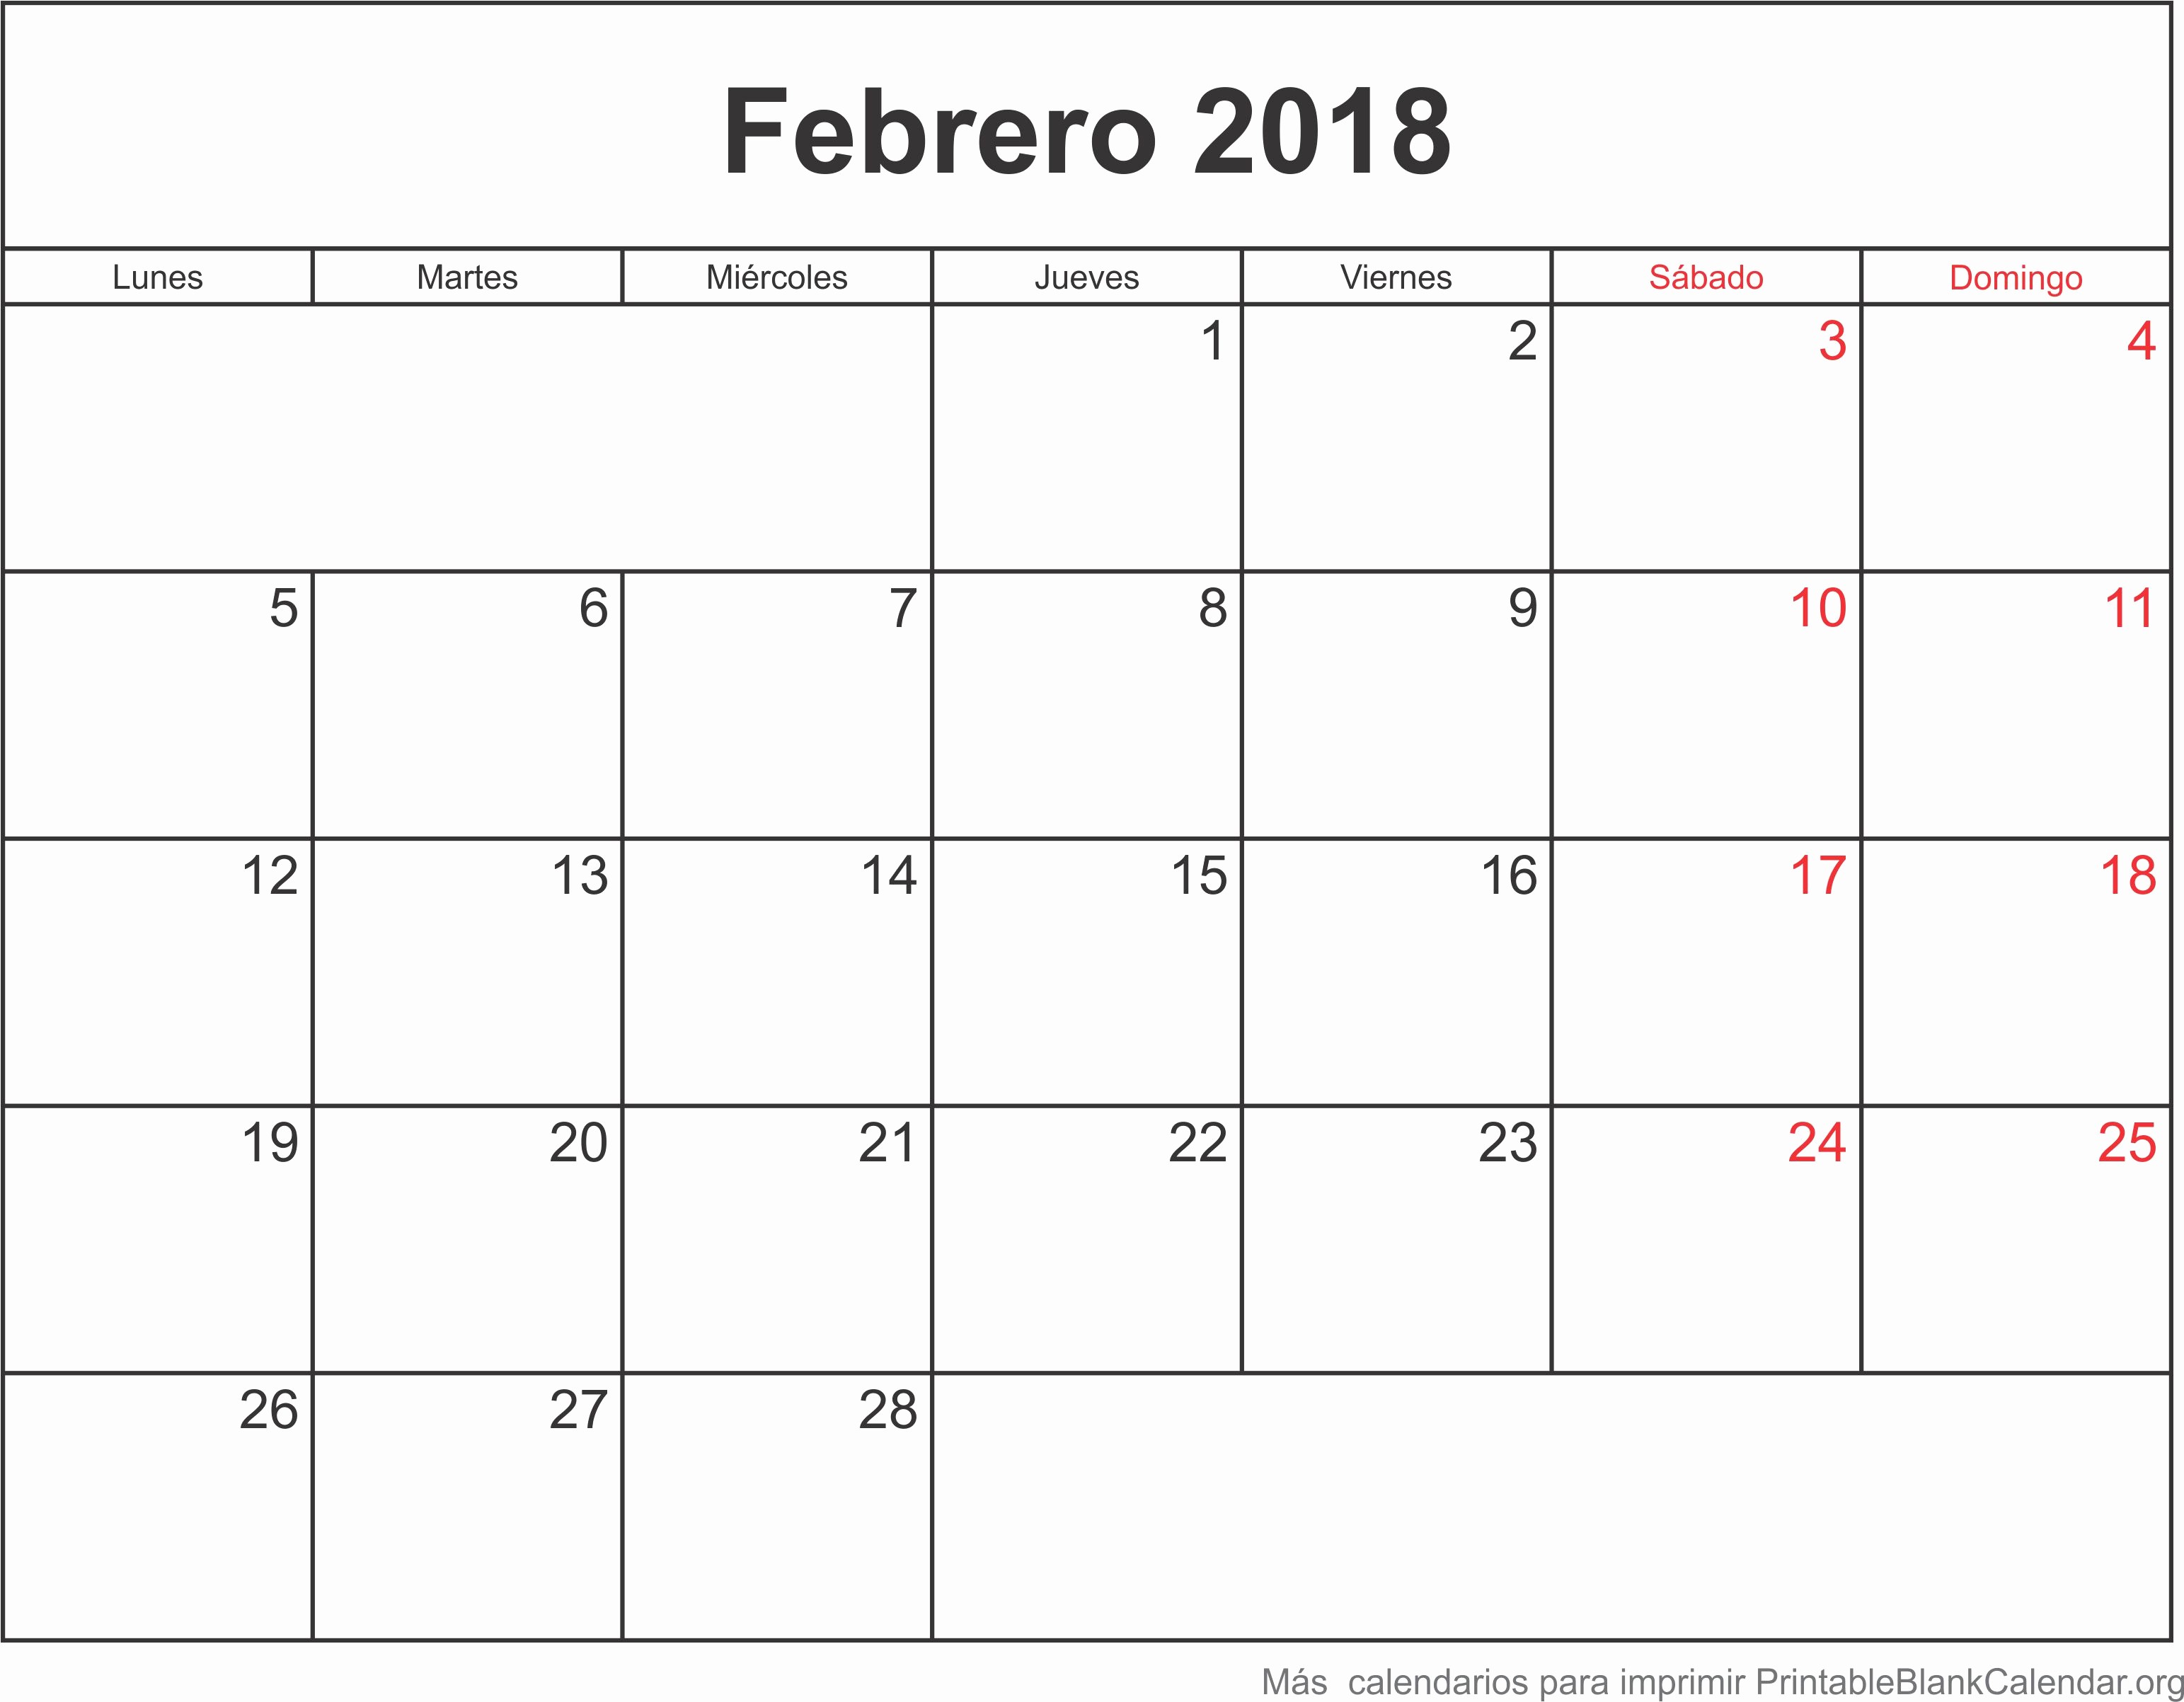 Calendario Febrero 2018 Para Imprimir Awesome Calendarios Para Imprimir Printableblankcalendar Es